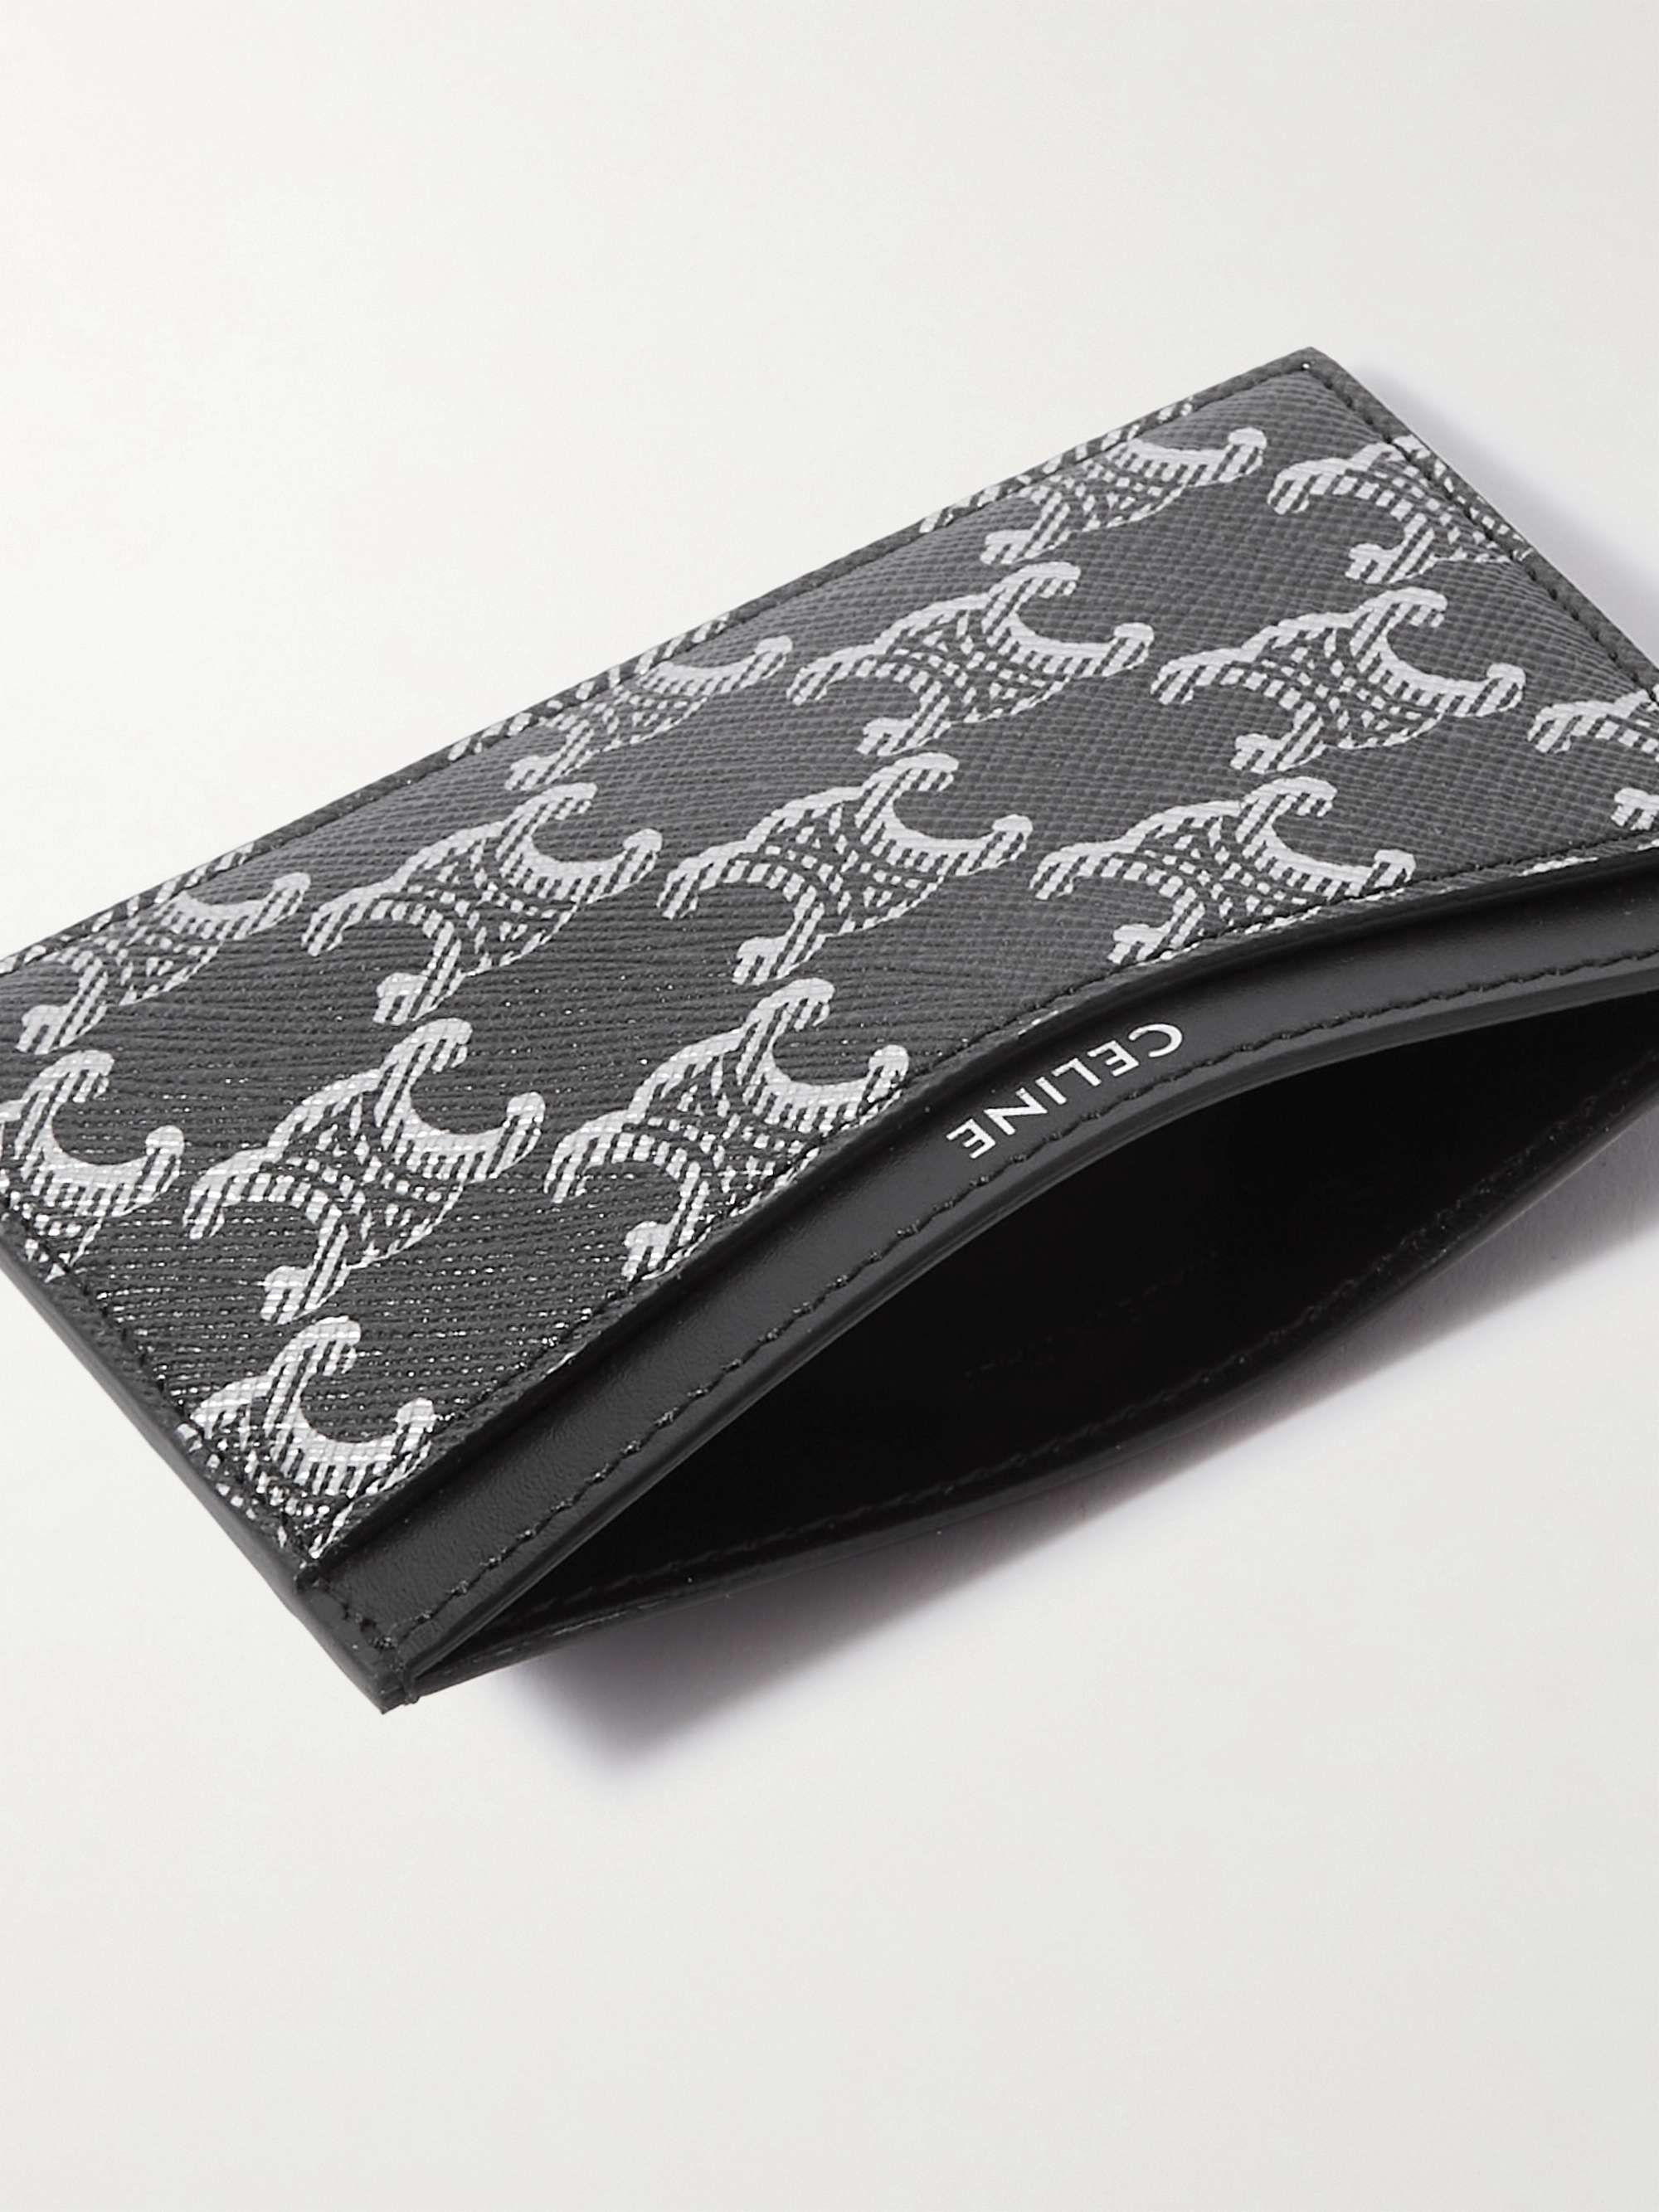 CELINE Triomphe Leather-Trimmed Logo-Print Coated-Canvas Cardholder